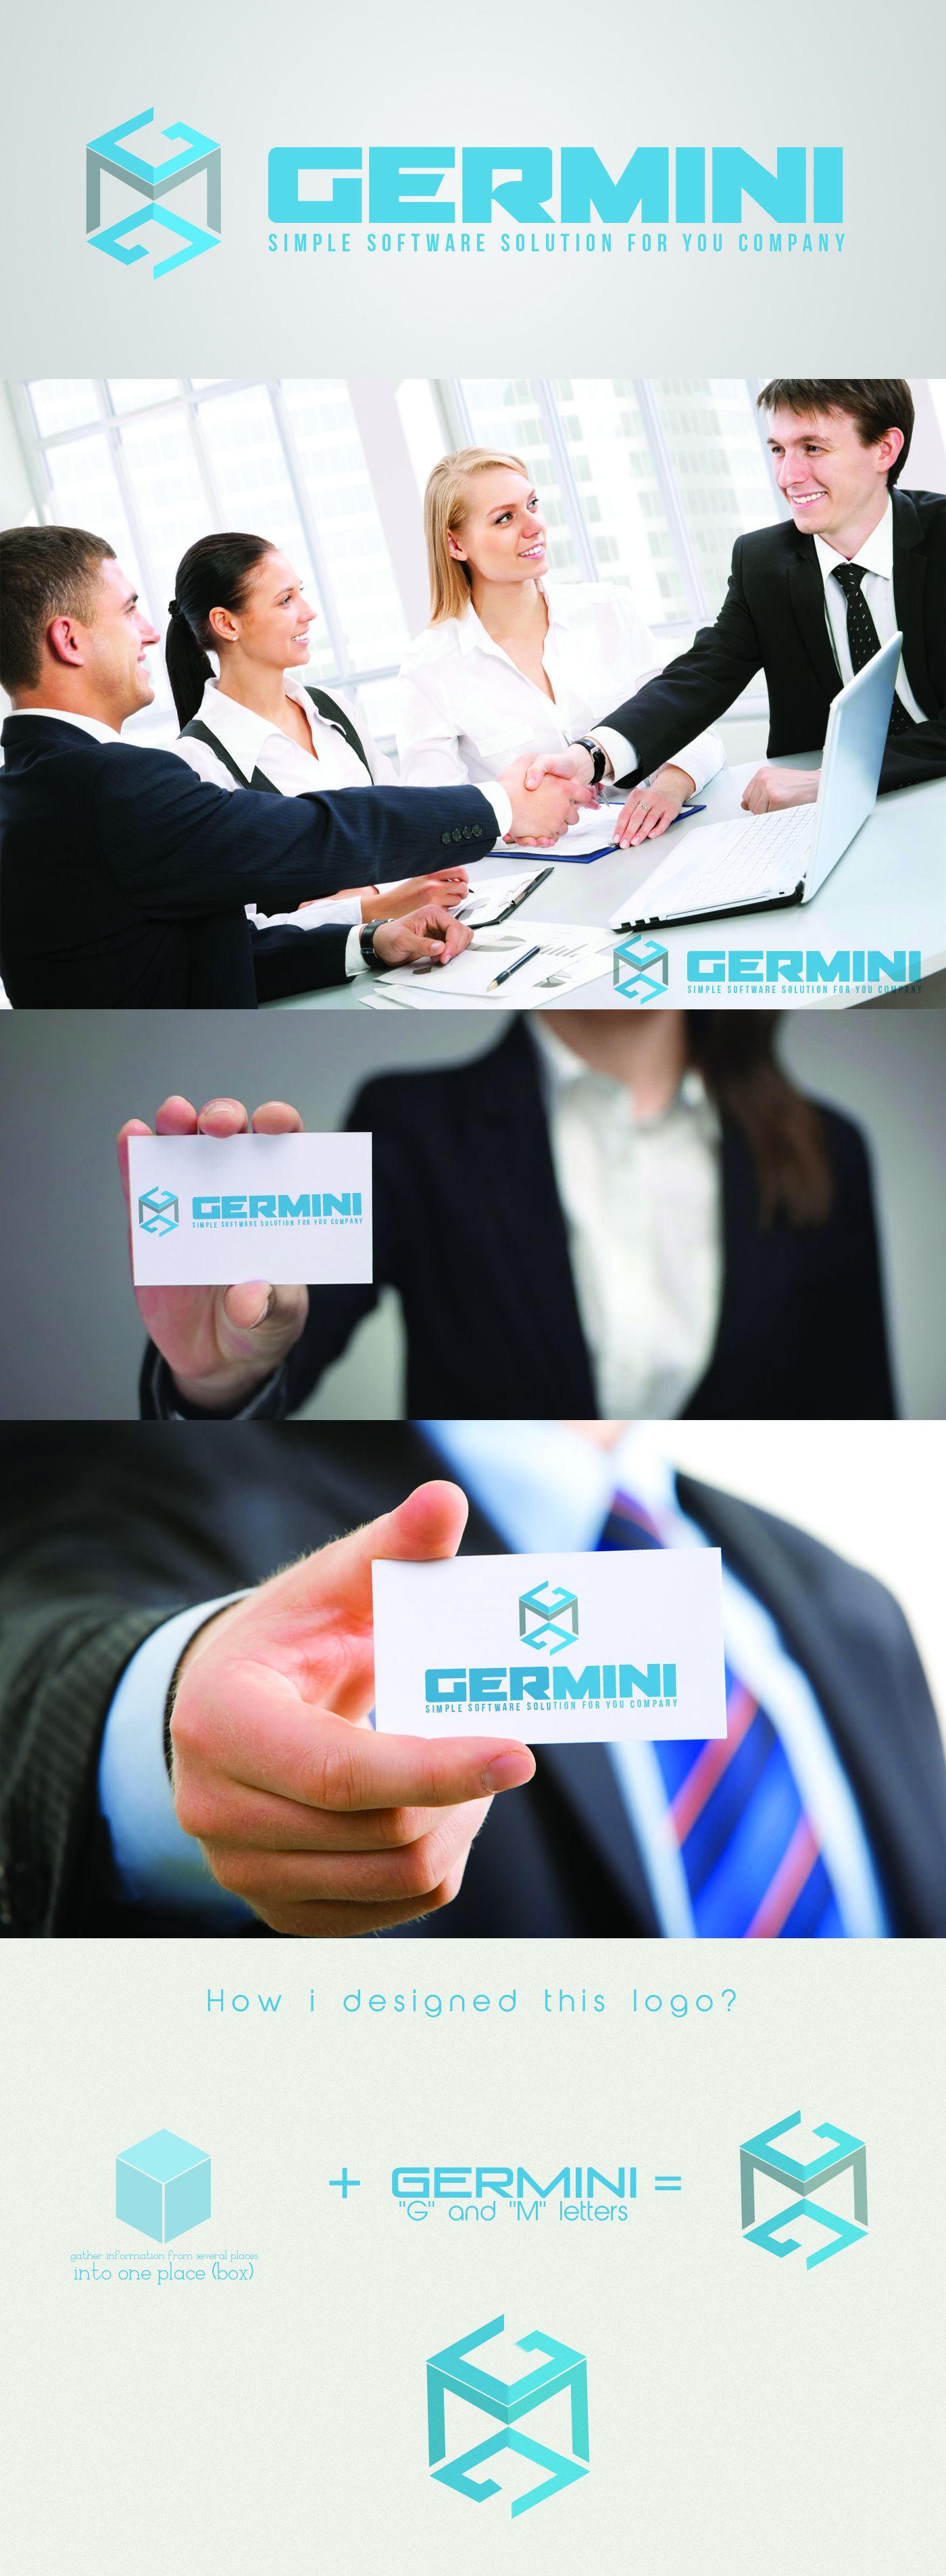 Germini IVS - Denmark